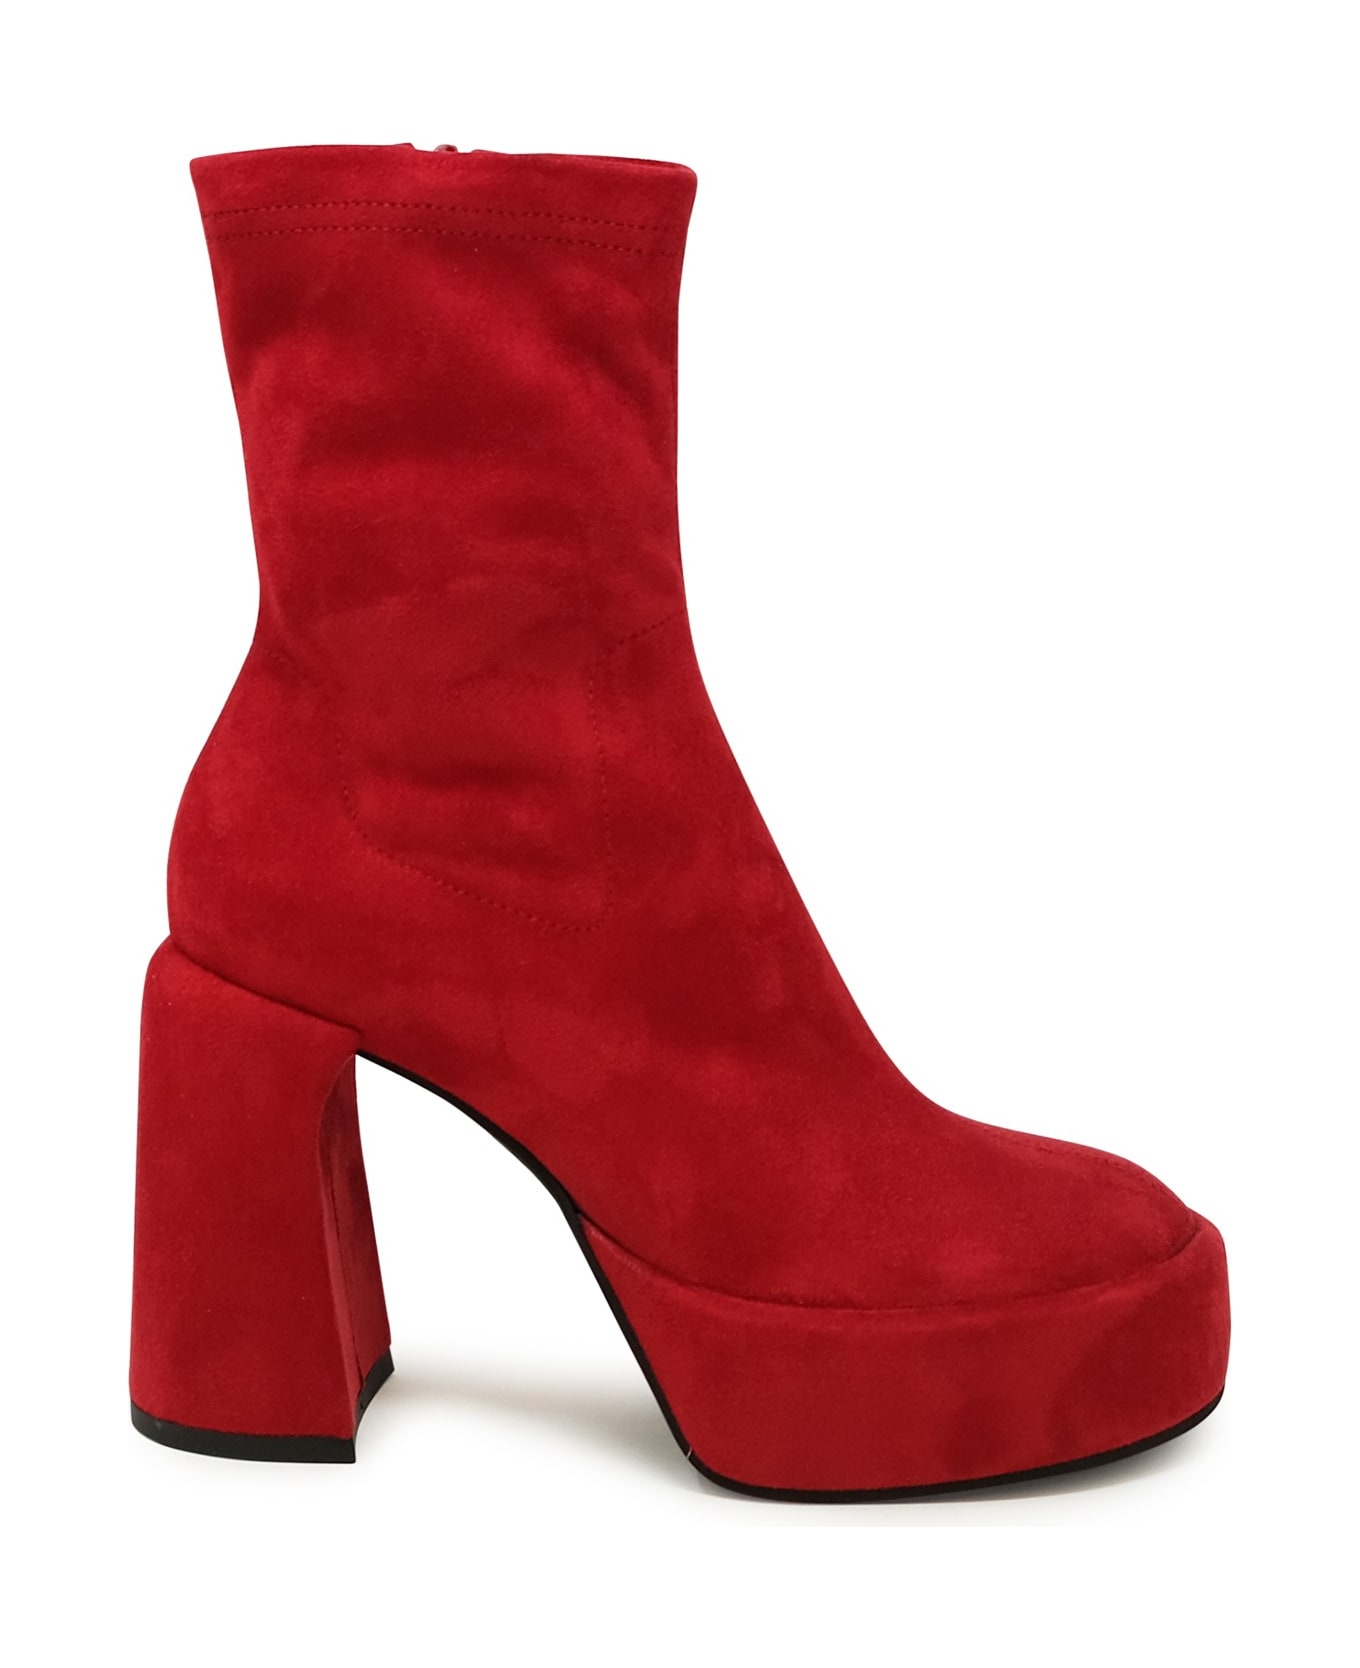 Elena Iachi Ecodaino Zelda Ankle Boots - RED